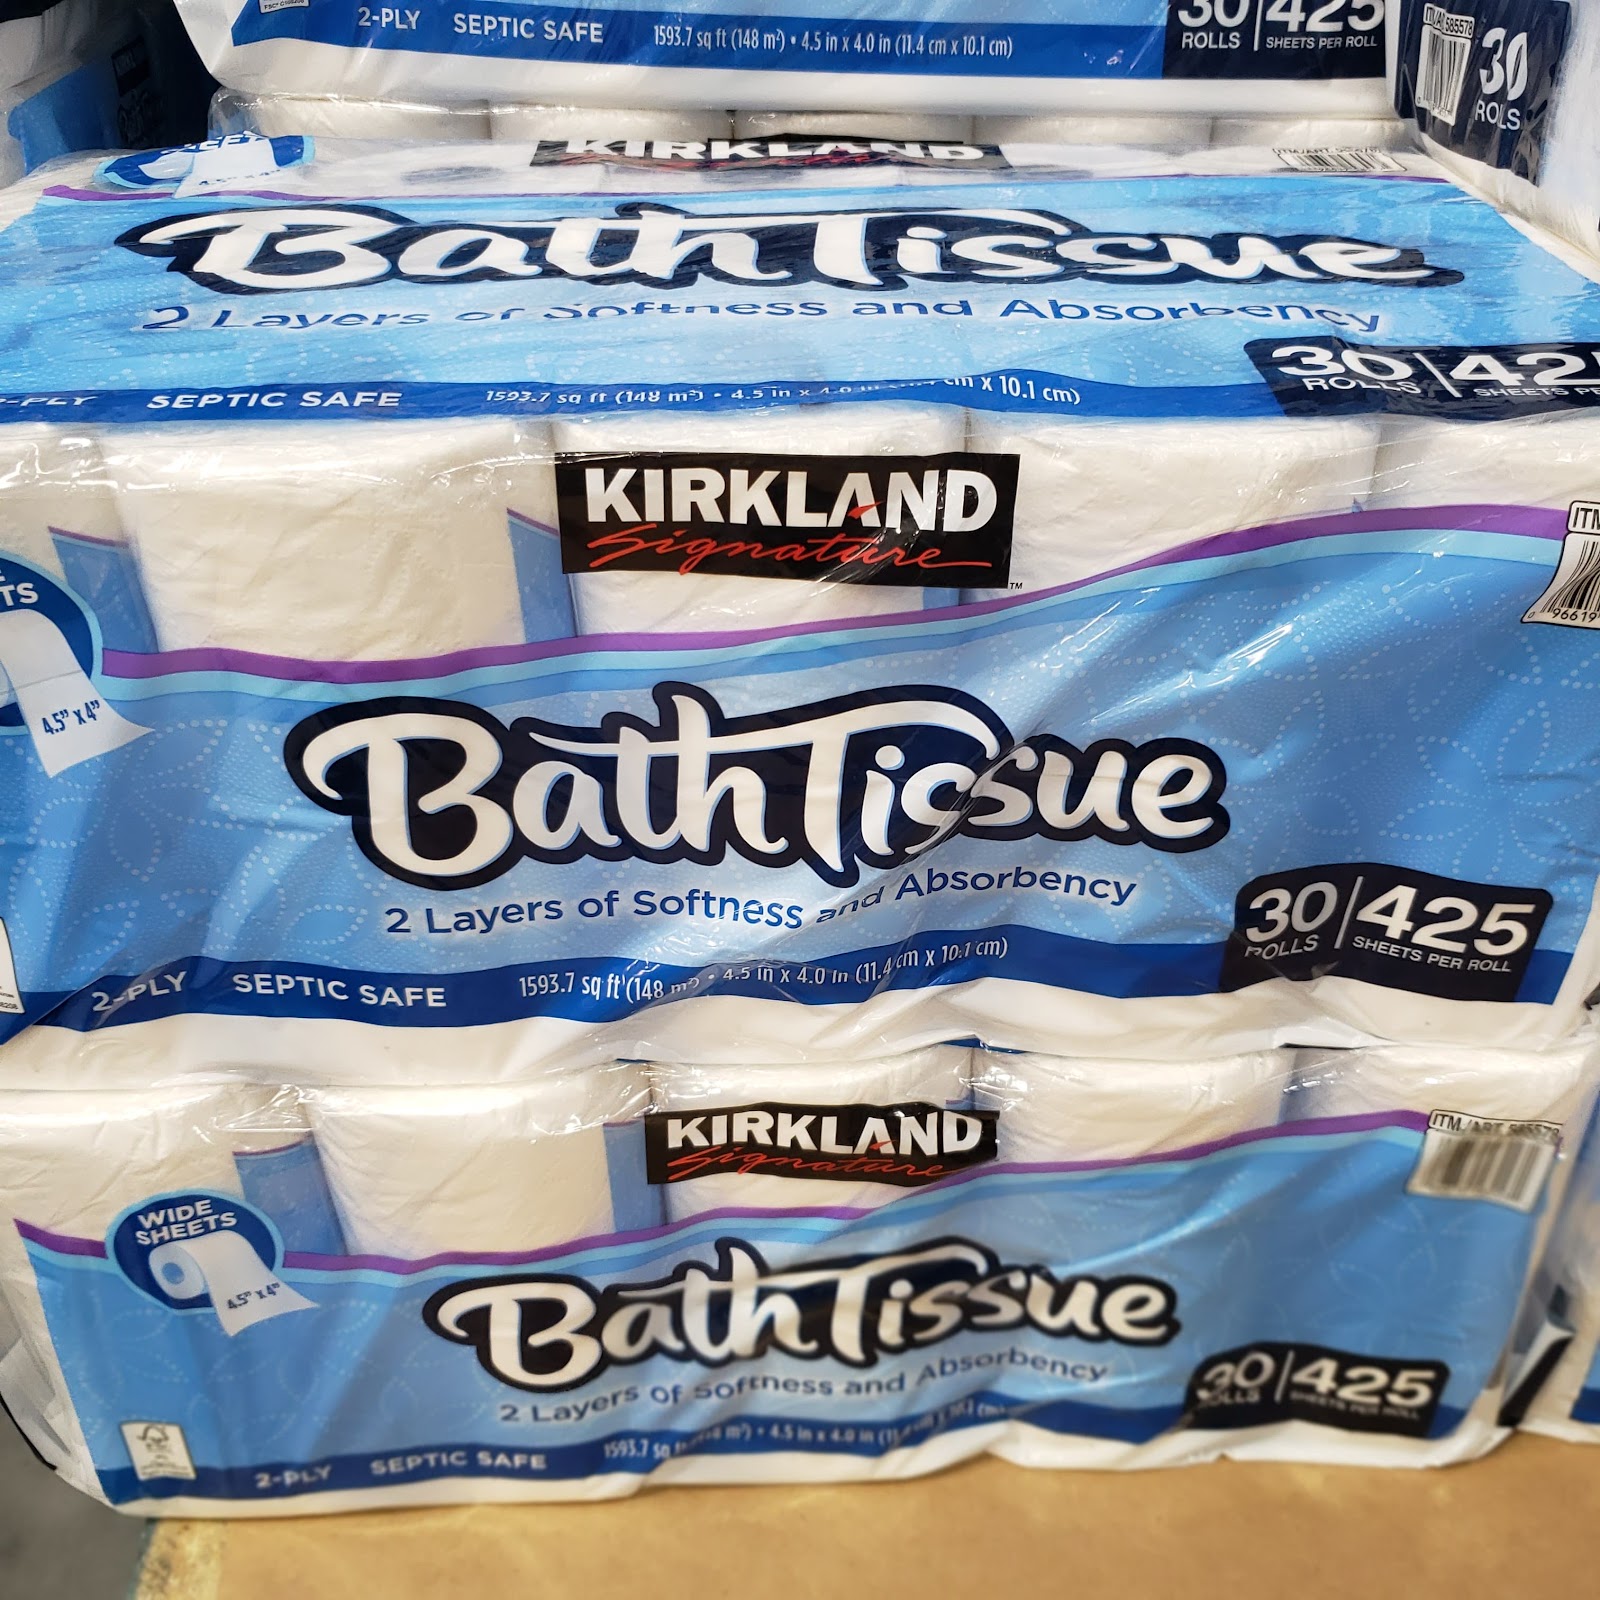 best kirkland brand items paper towel